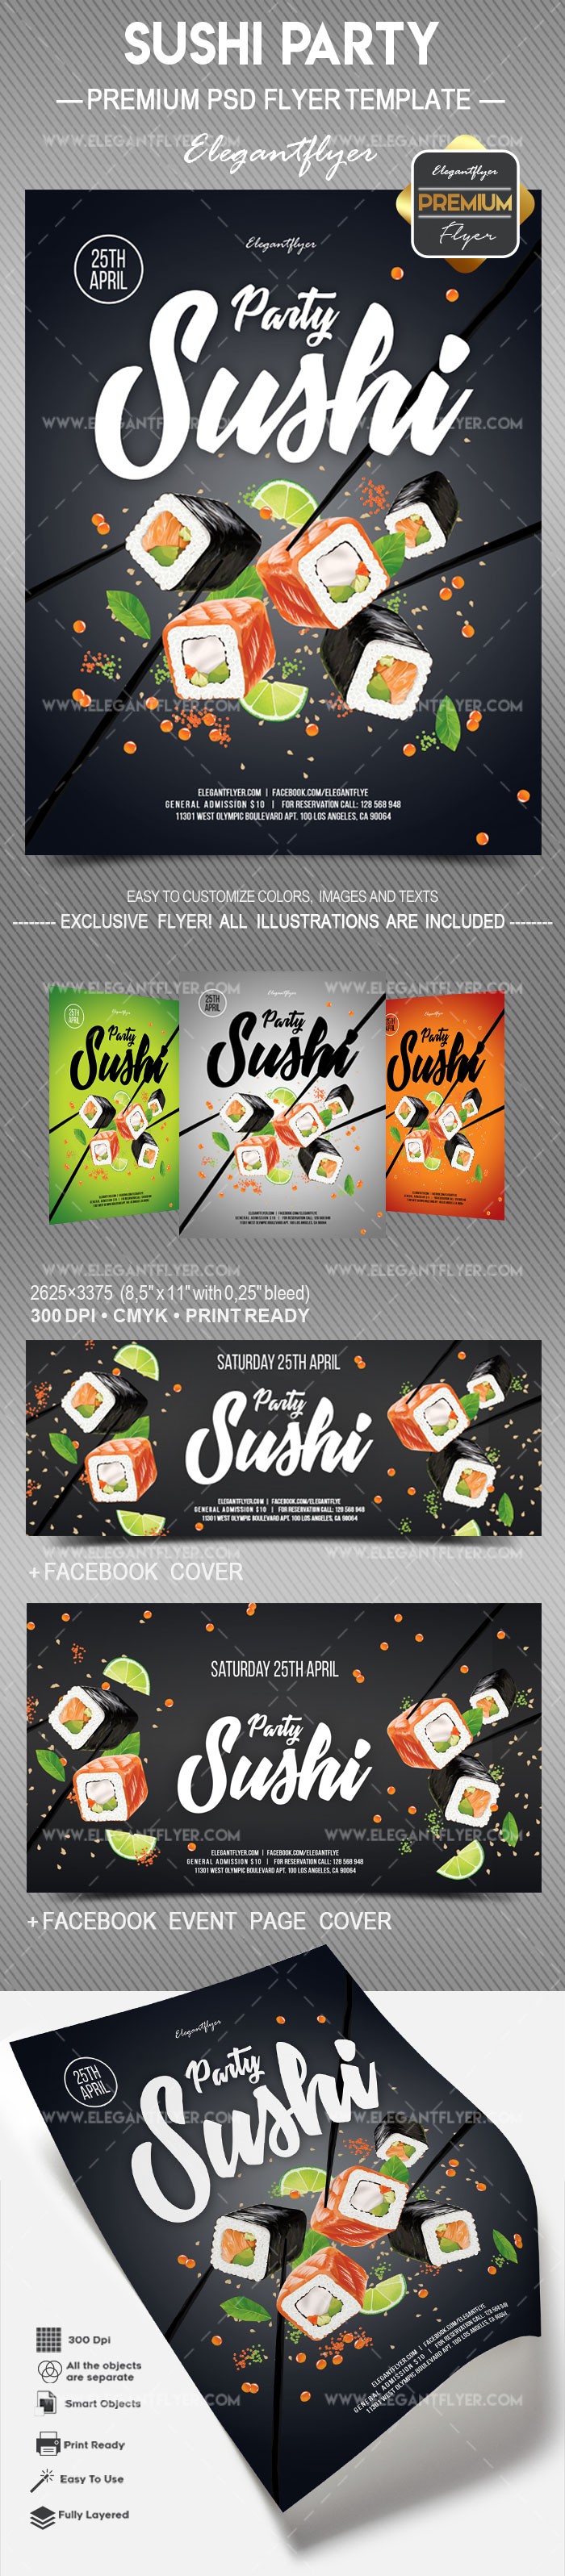 Sushi Party by ElegantFlyer